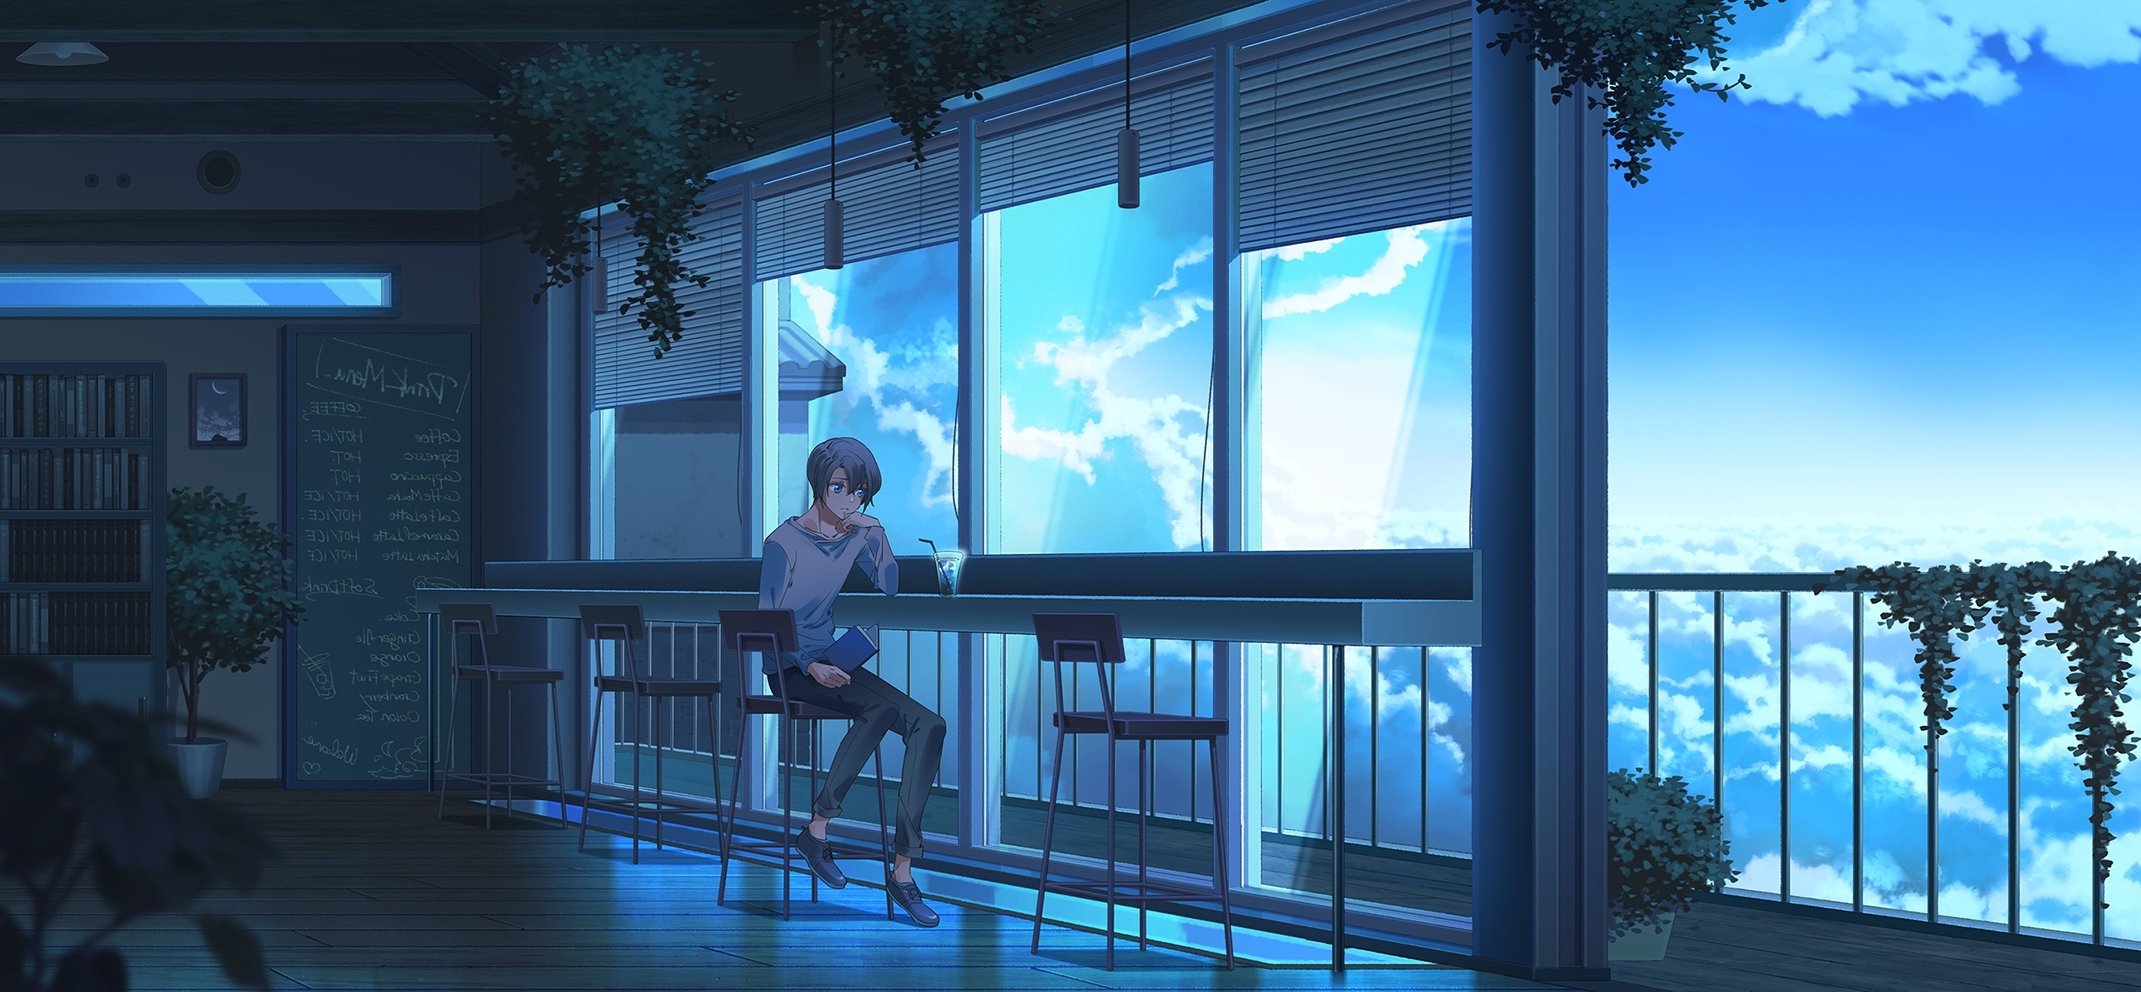 Wallpaper Clouds, Anime Boy, Cafe, Balcony:2141x992